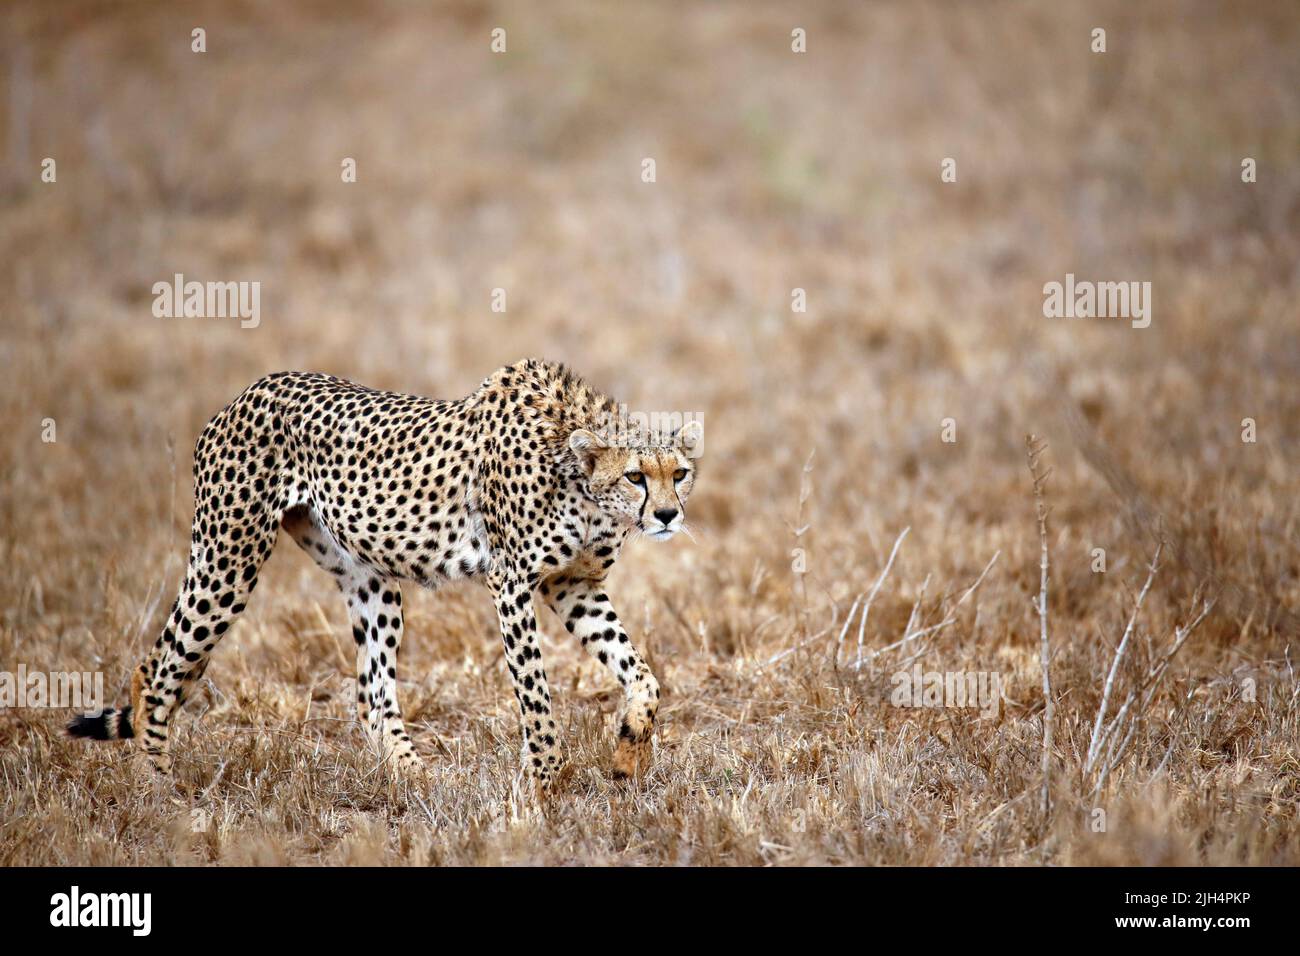 Cheetah Walking on Grass. Taita Hills, Kenya Stock Photo